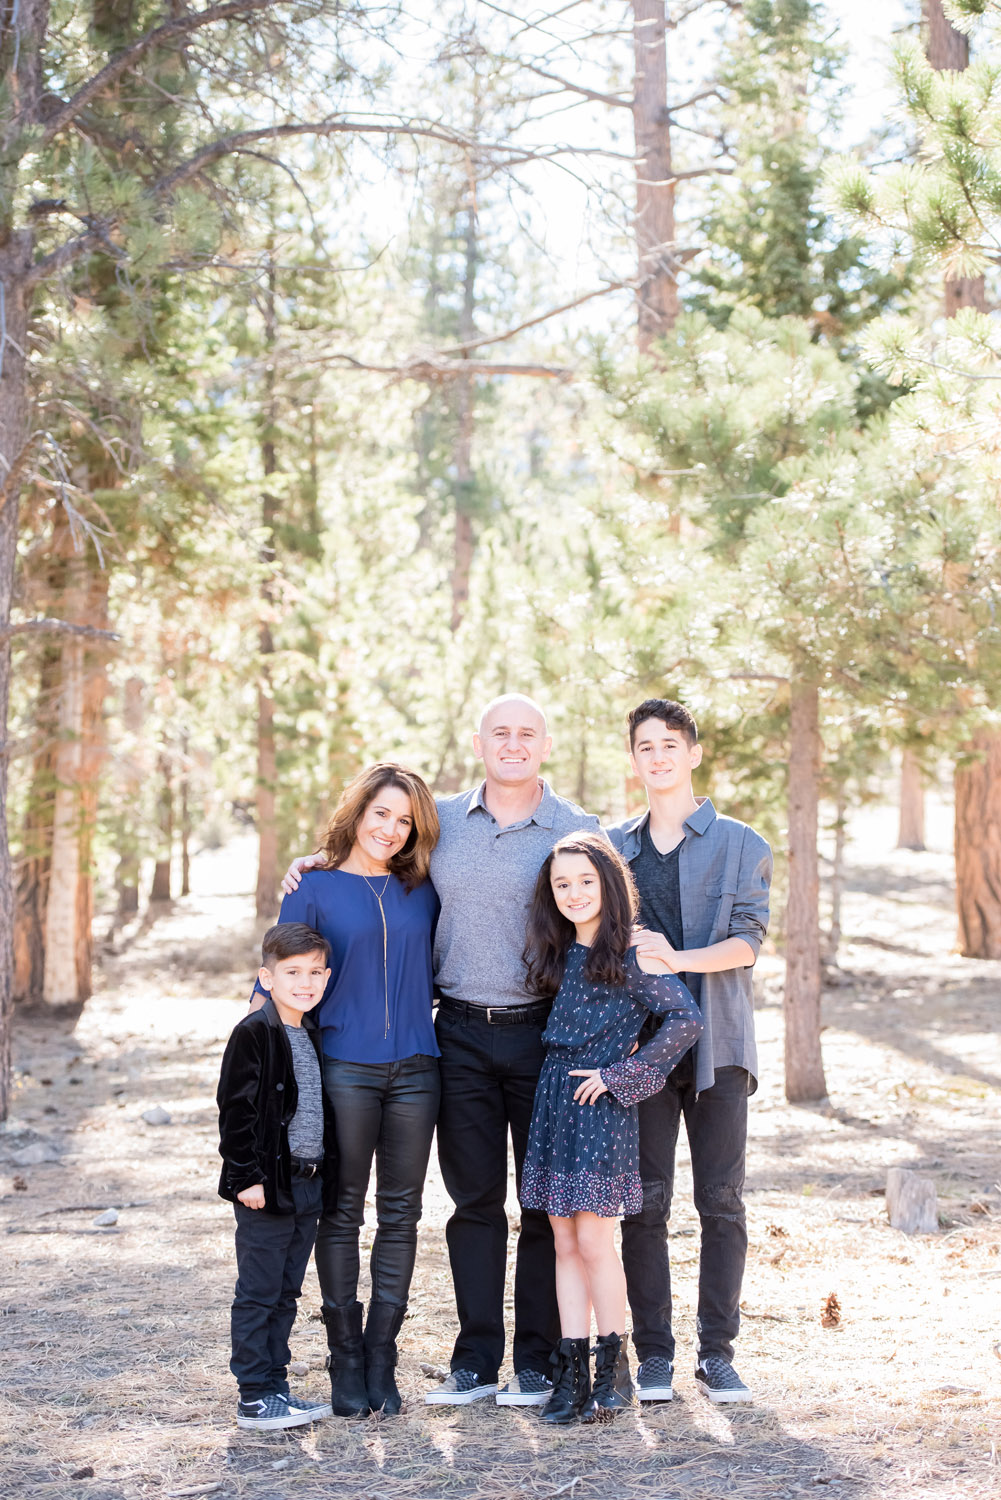 Family Portrait Session | Kristen Marie Weddings + Portraits, Las Vegas family photographer